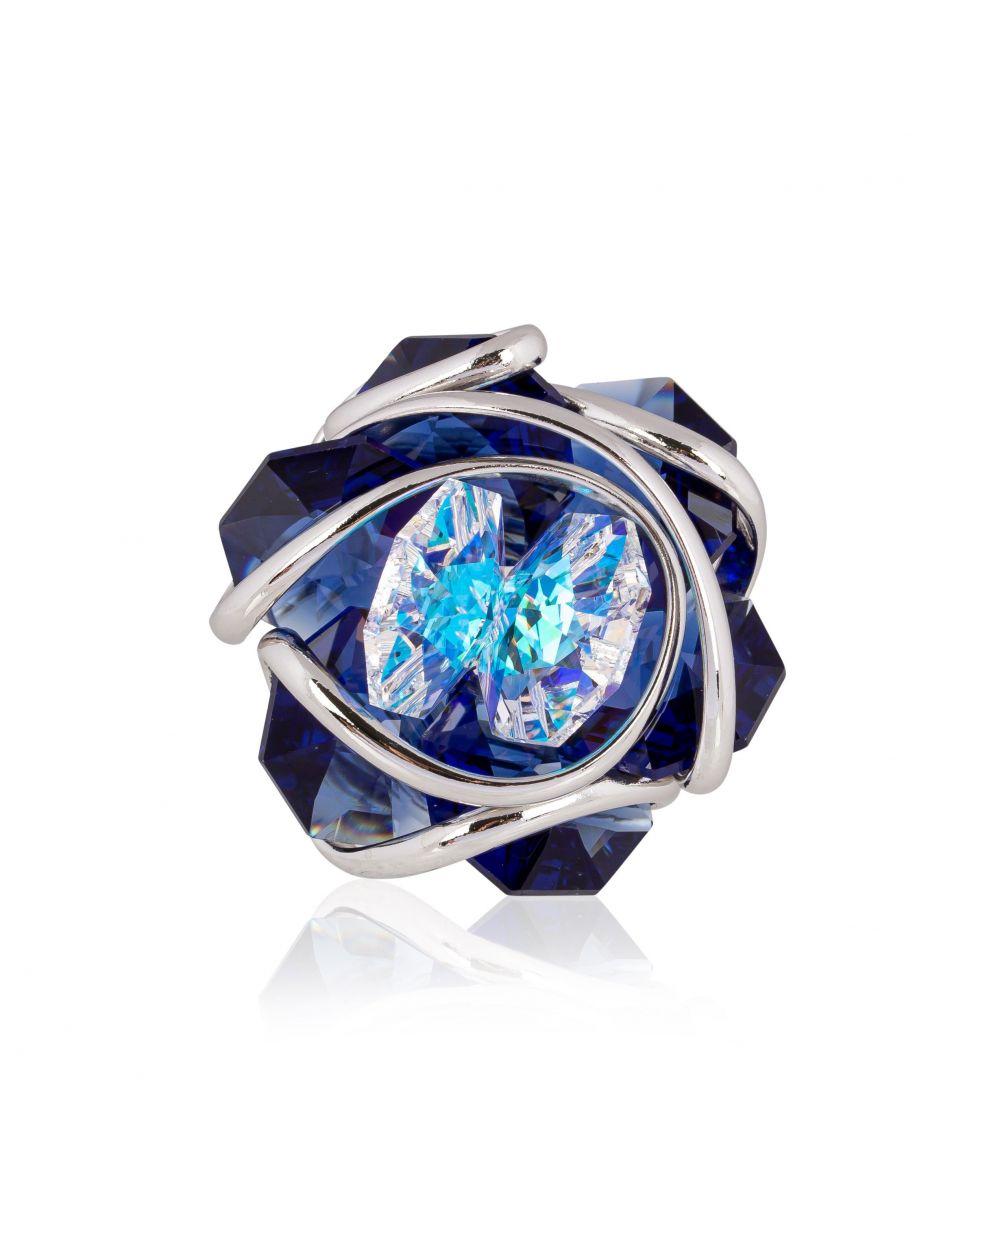 Andrea Marazzini - Bague cristal Swarovski Flower F48 New Blue